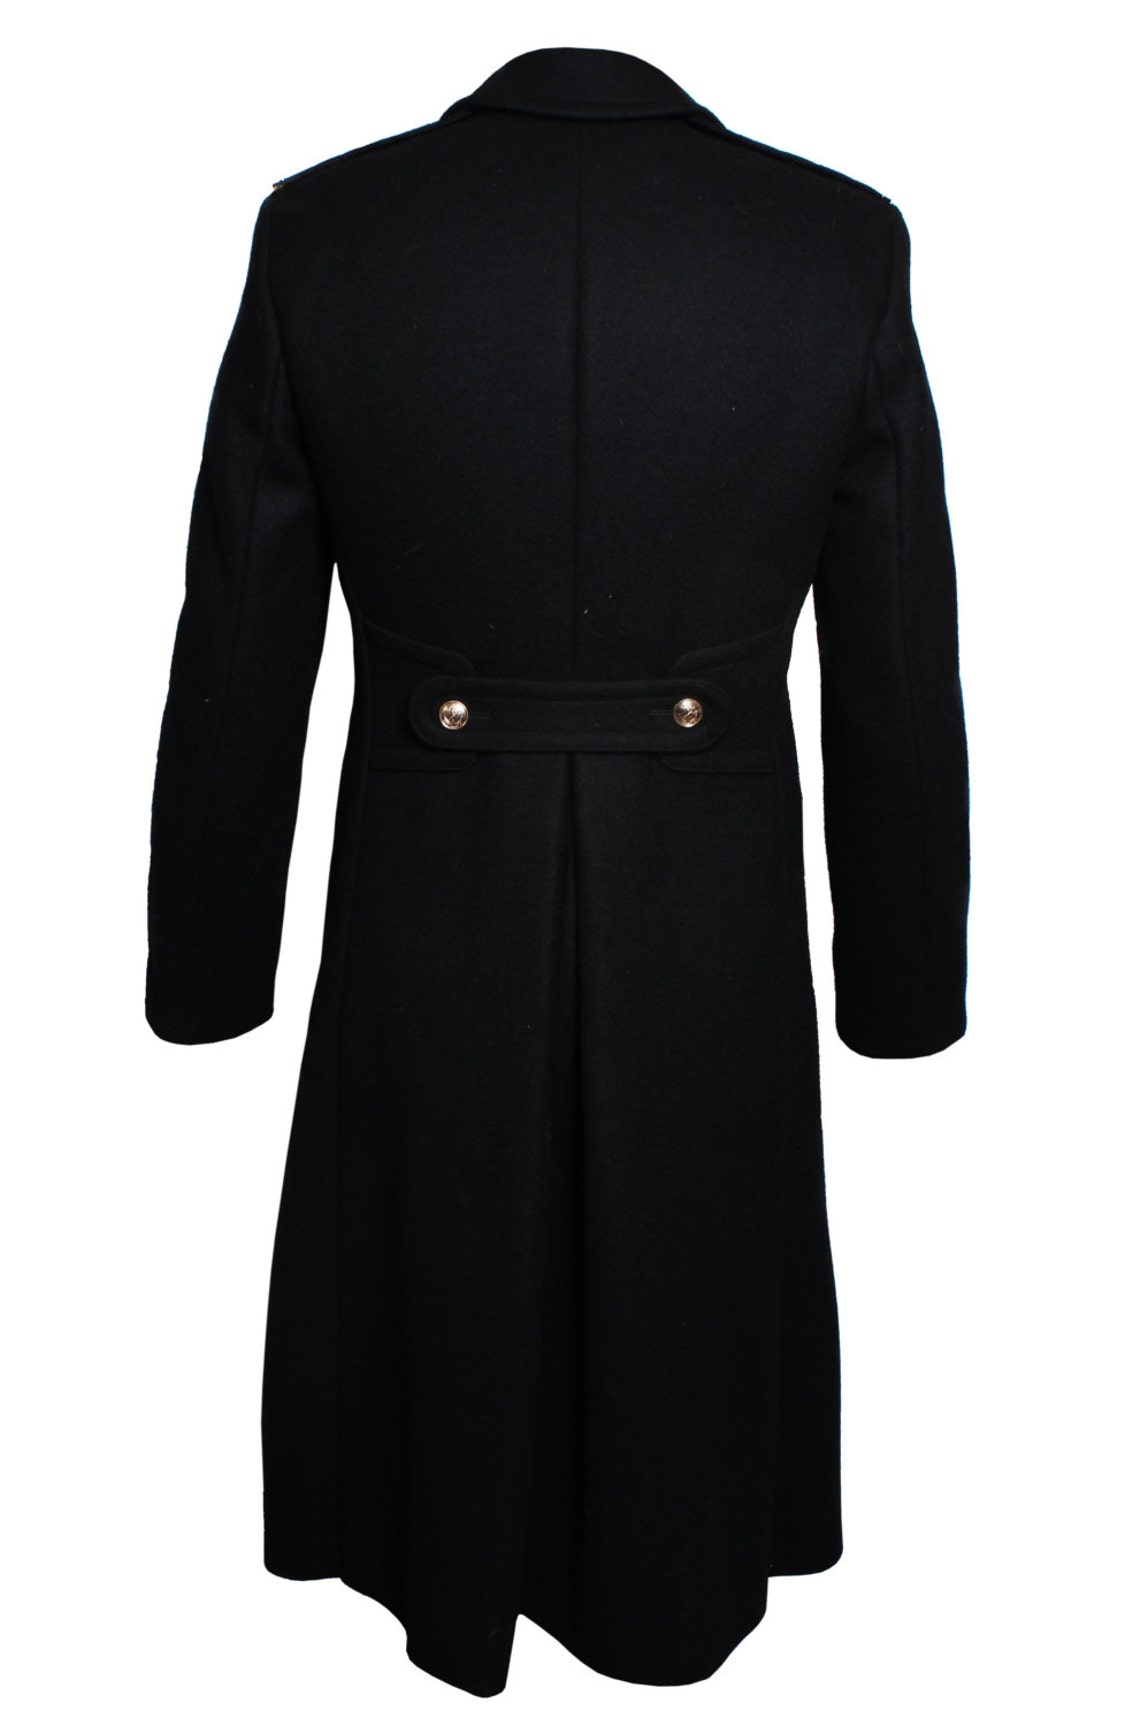 Russian black overcoat Navy Fleet wool long coat Naval Officer | Etsy